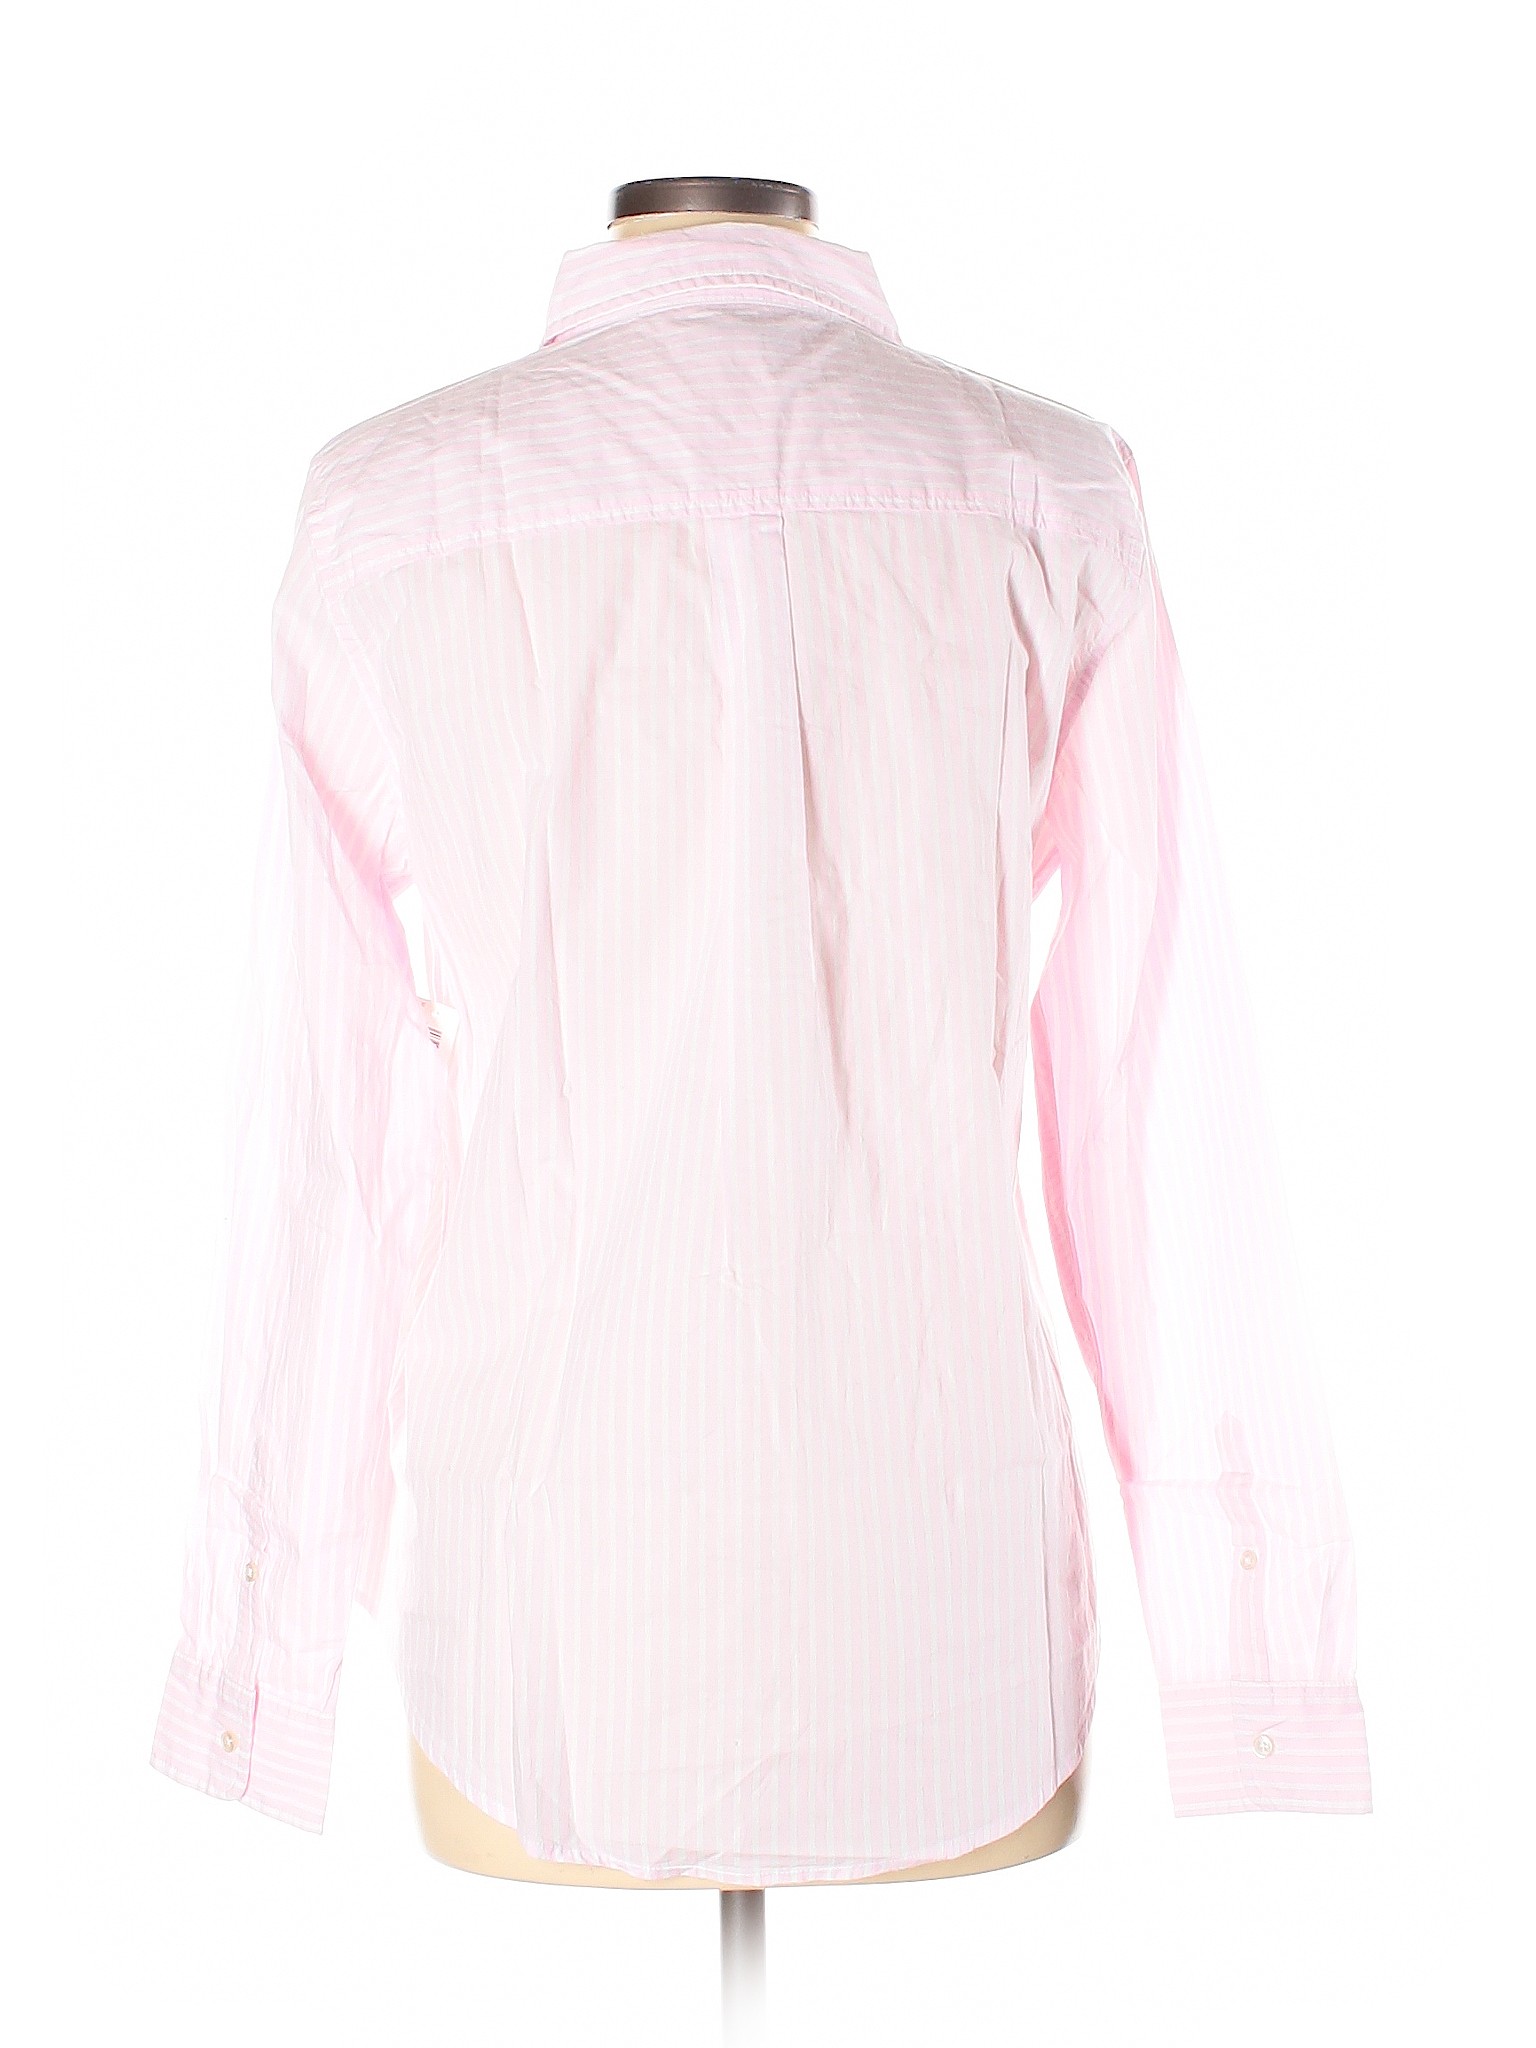 NWT Amazon Essentials Women Pink Long Sleeve Button-Down Shirt M | eBay